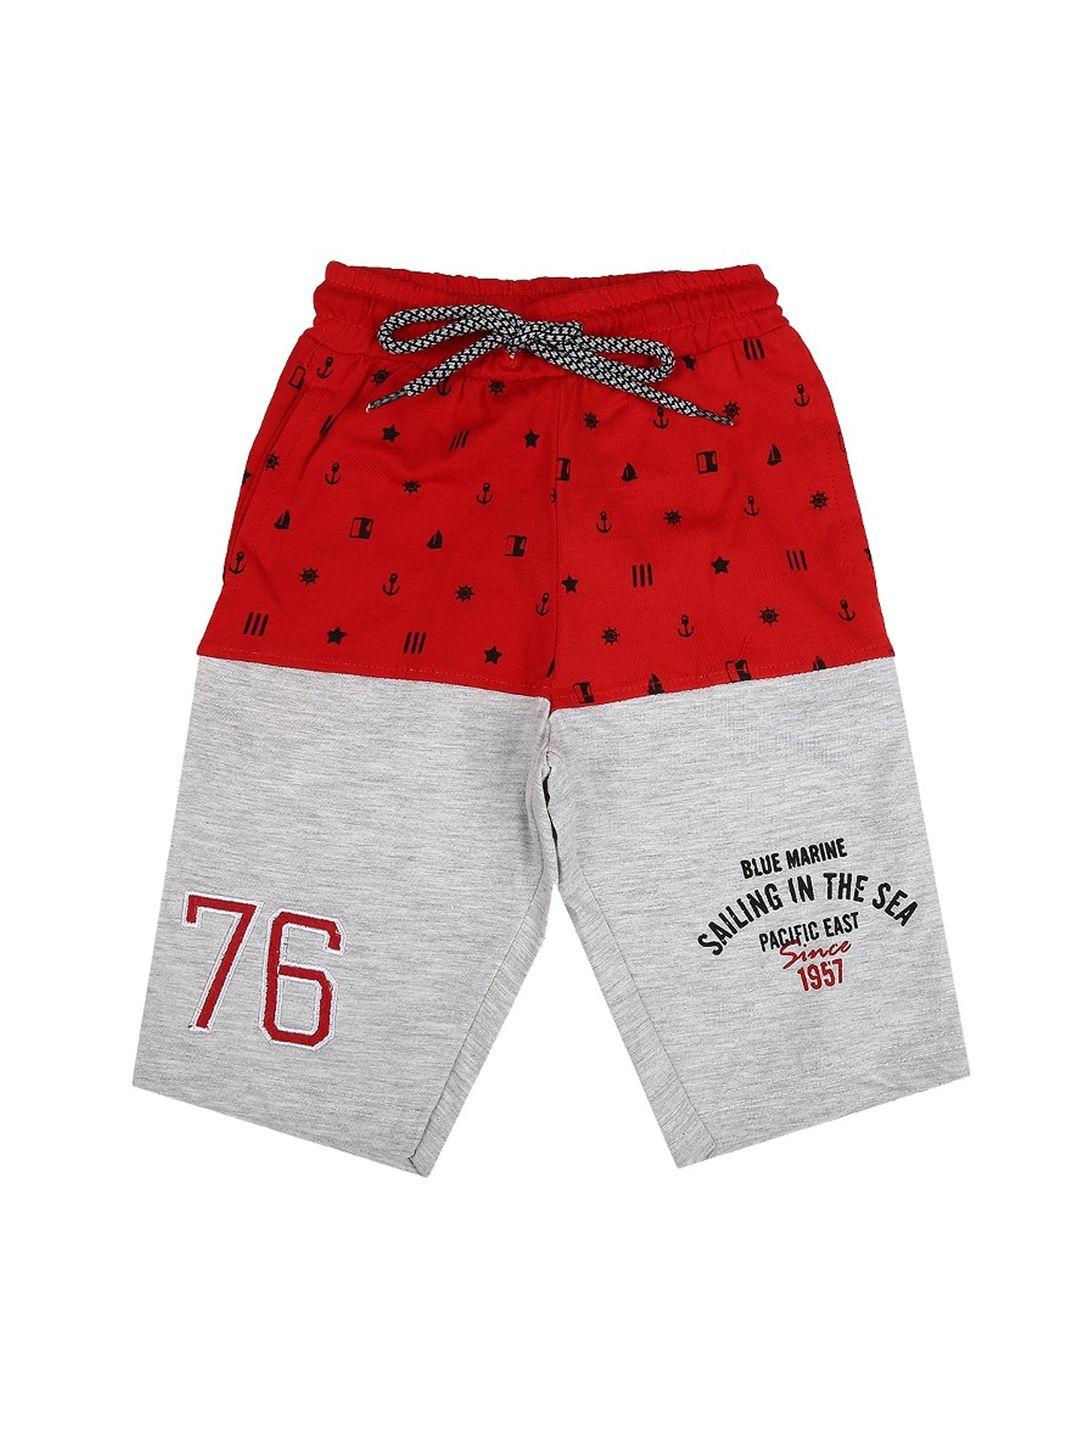 v-mart boys conversational printed mid-rise cotton shorts